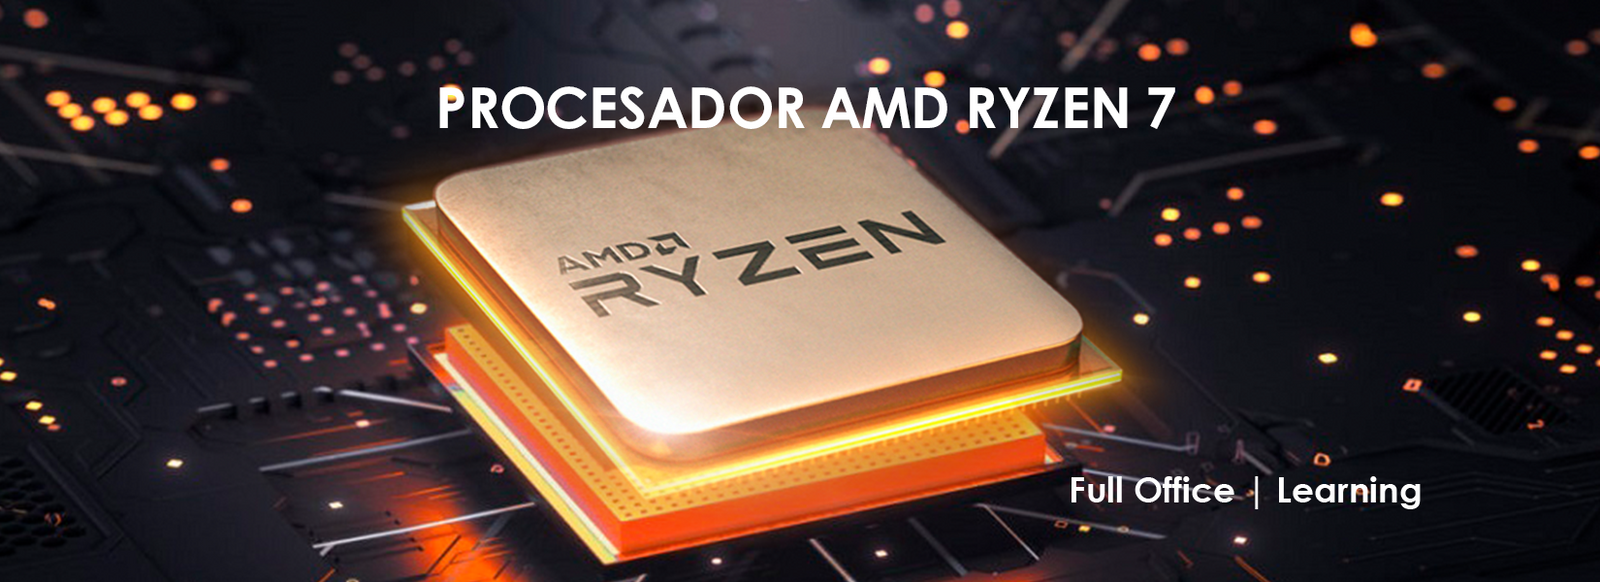 Procesador AMD Ryzen 7 FullOffice.com